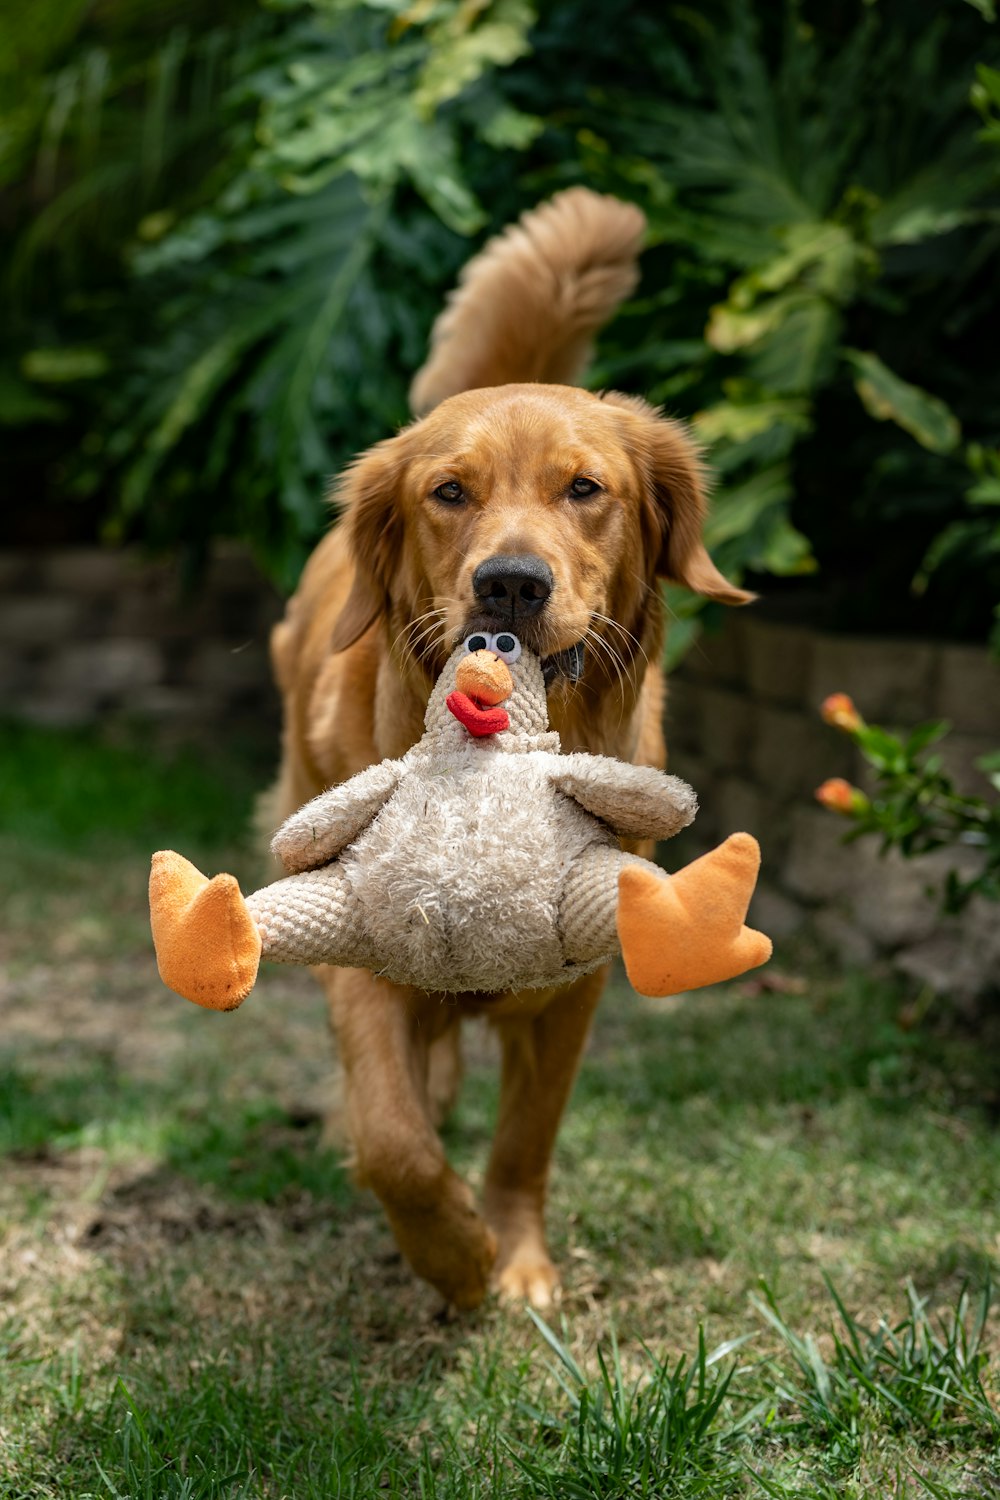 golden retriever puppy biting orange and white plush toy on green grass field during daytime